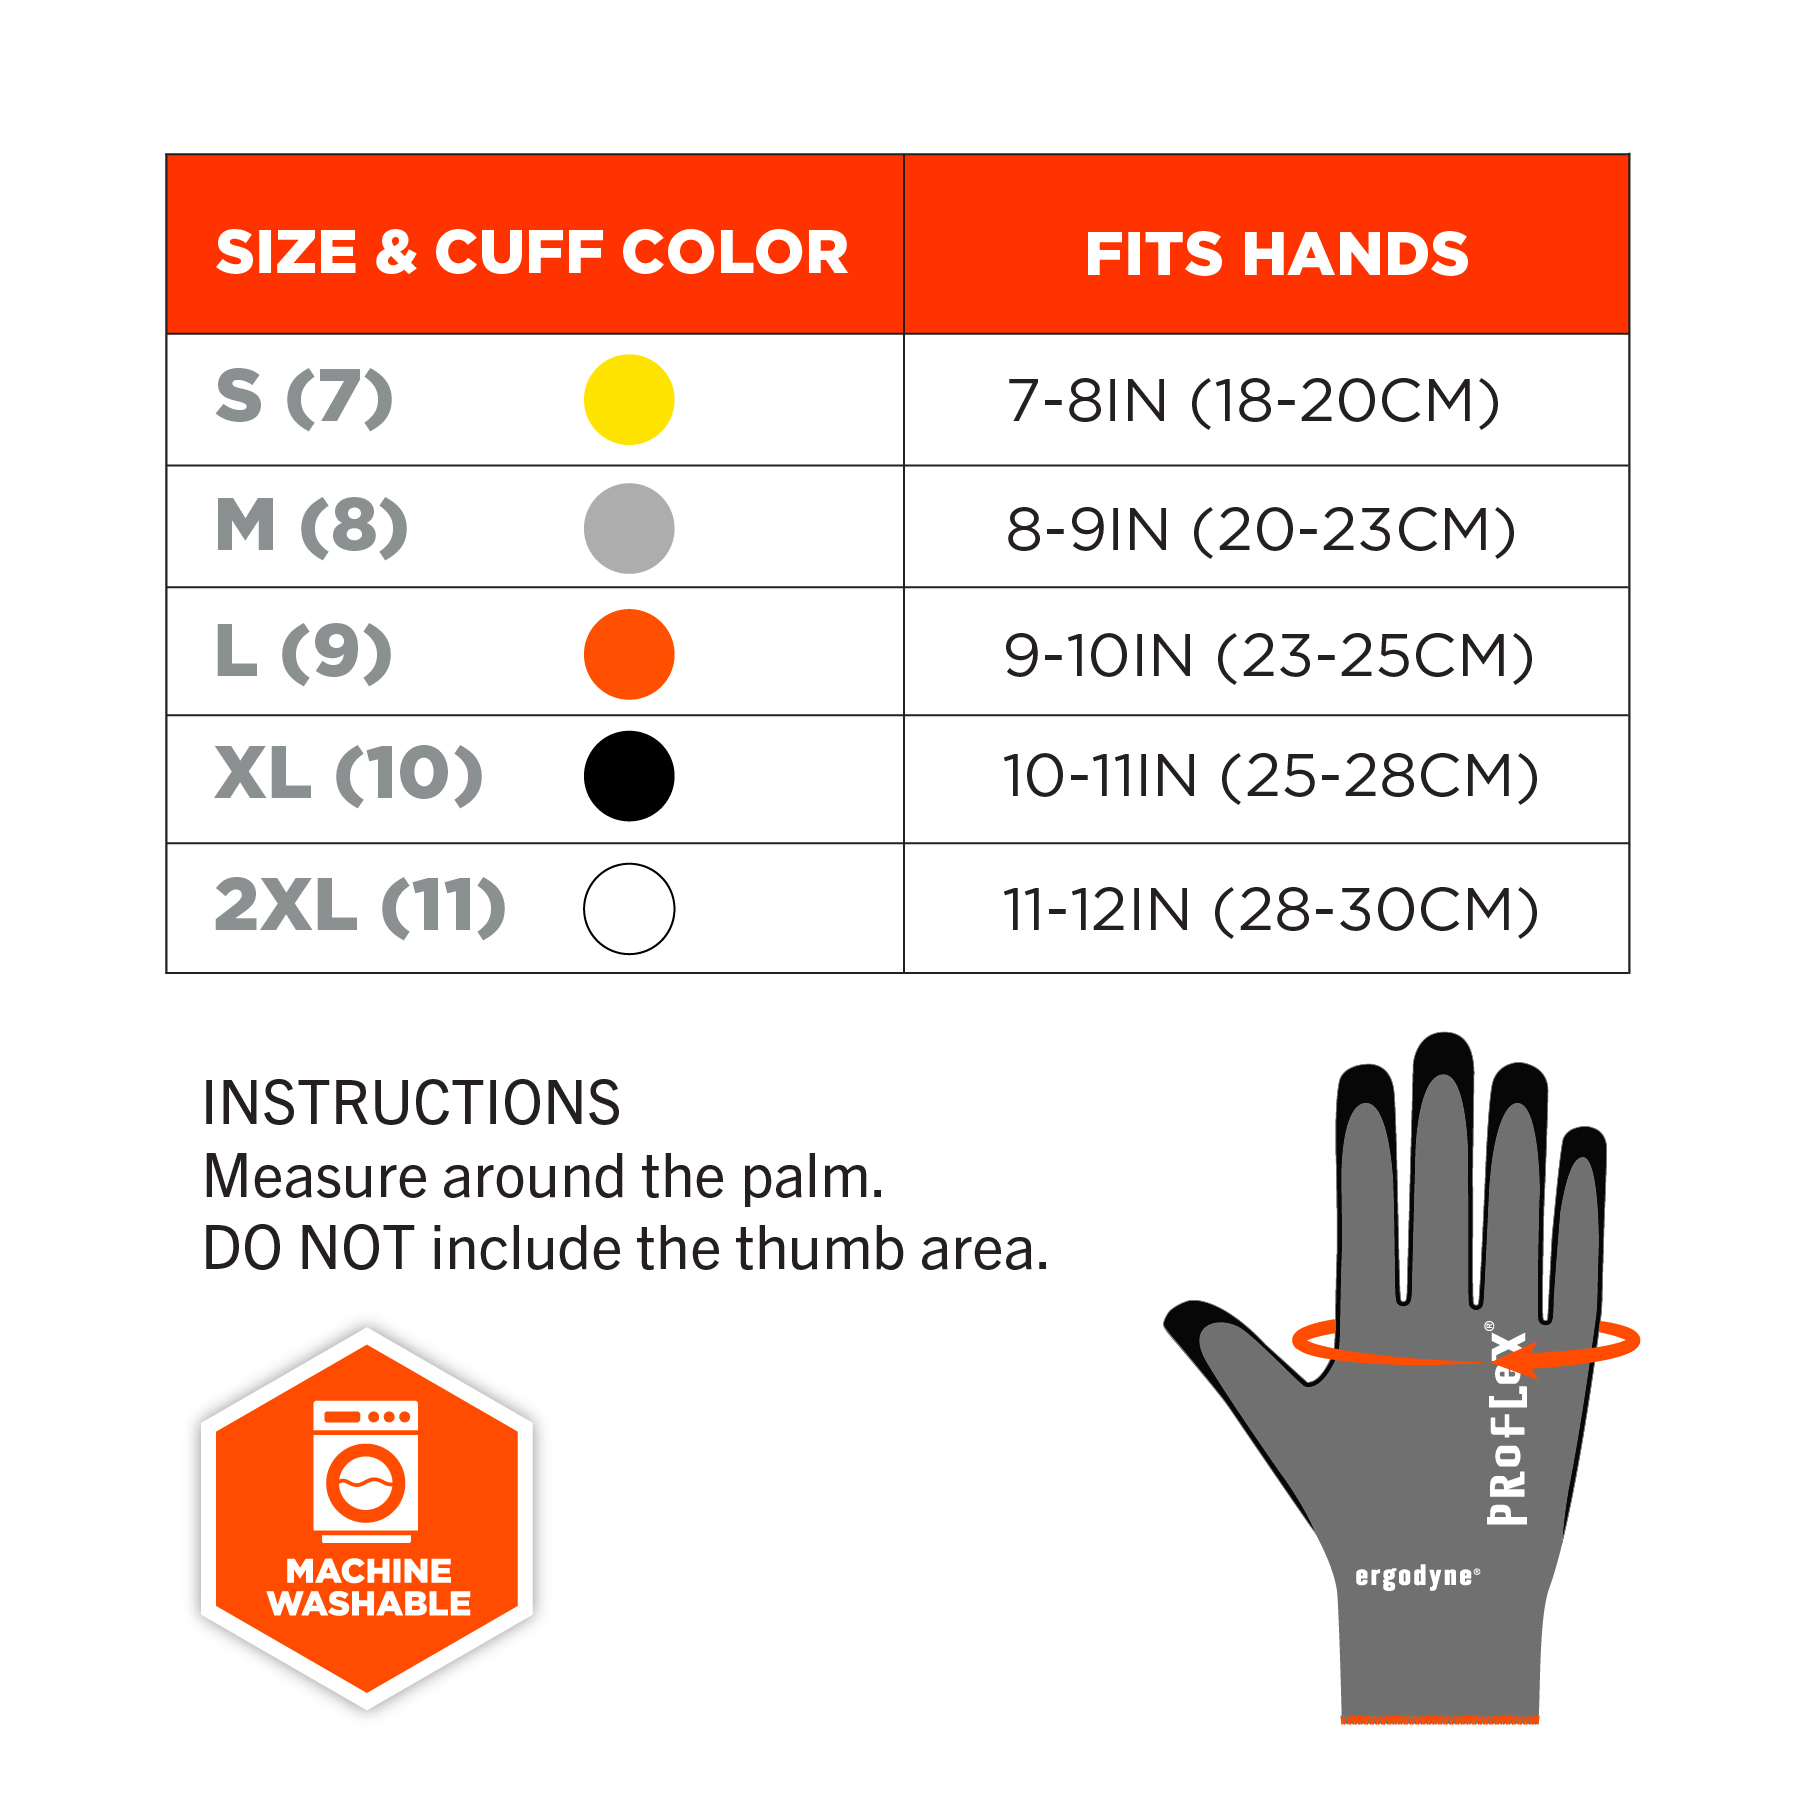 ANSI/ISEA 105-2016 A4 Nitrile Coated CR Gloves